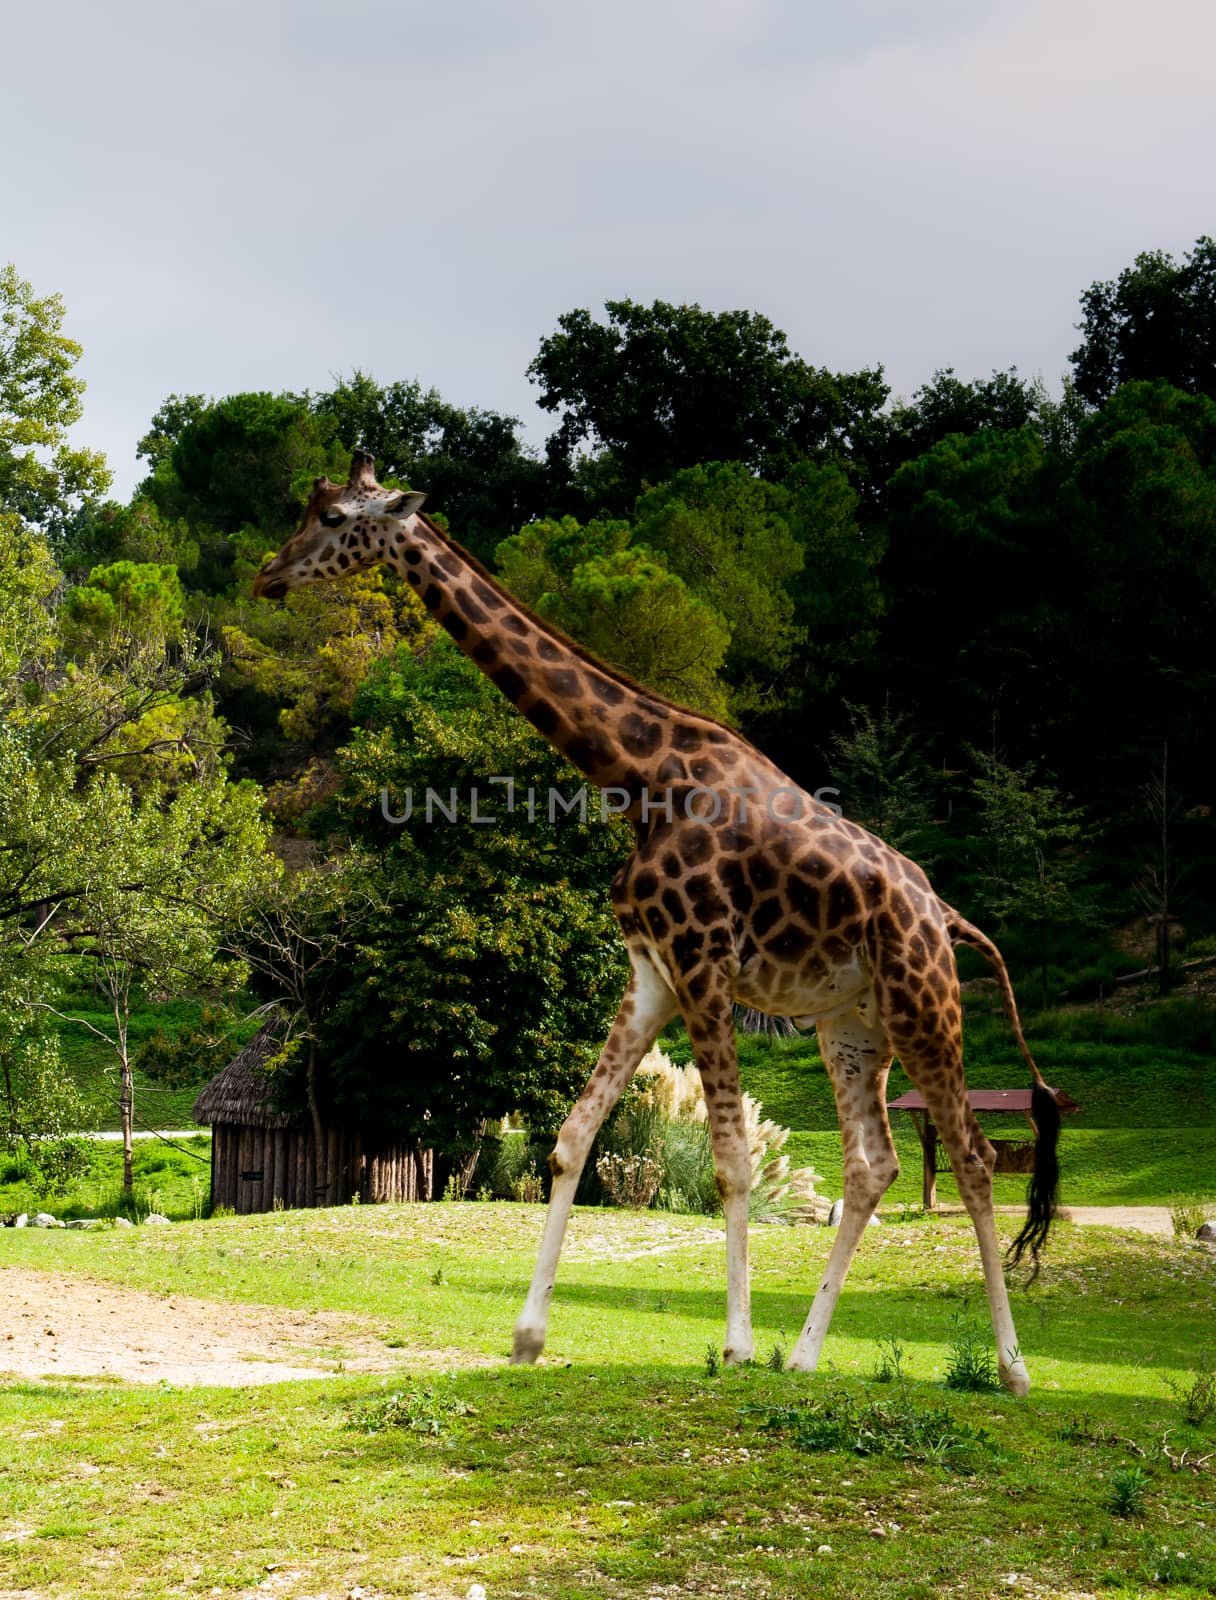 Giraffe by Isaac74